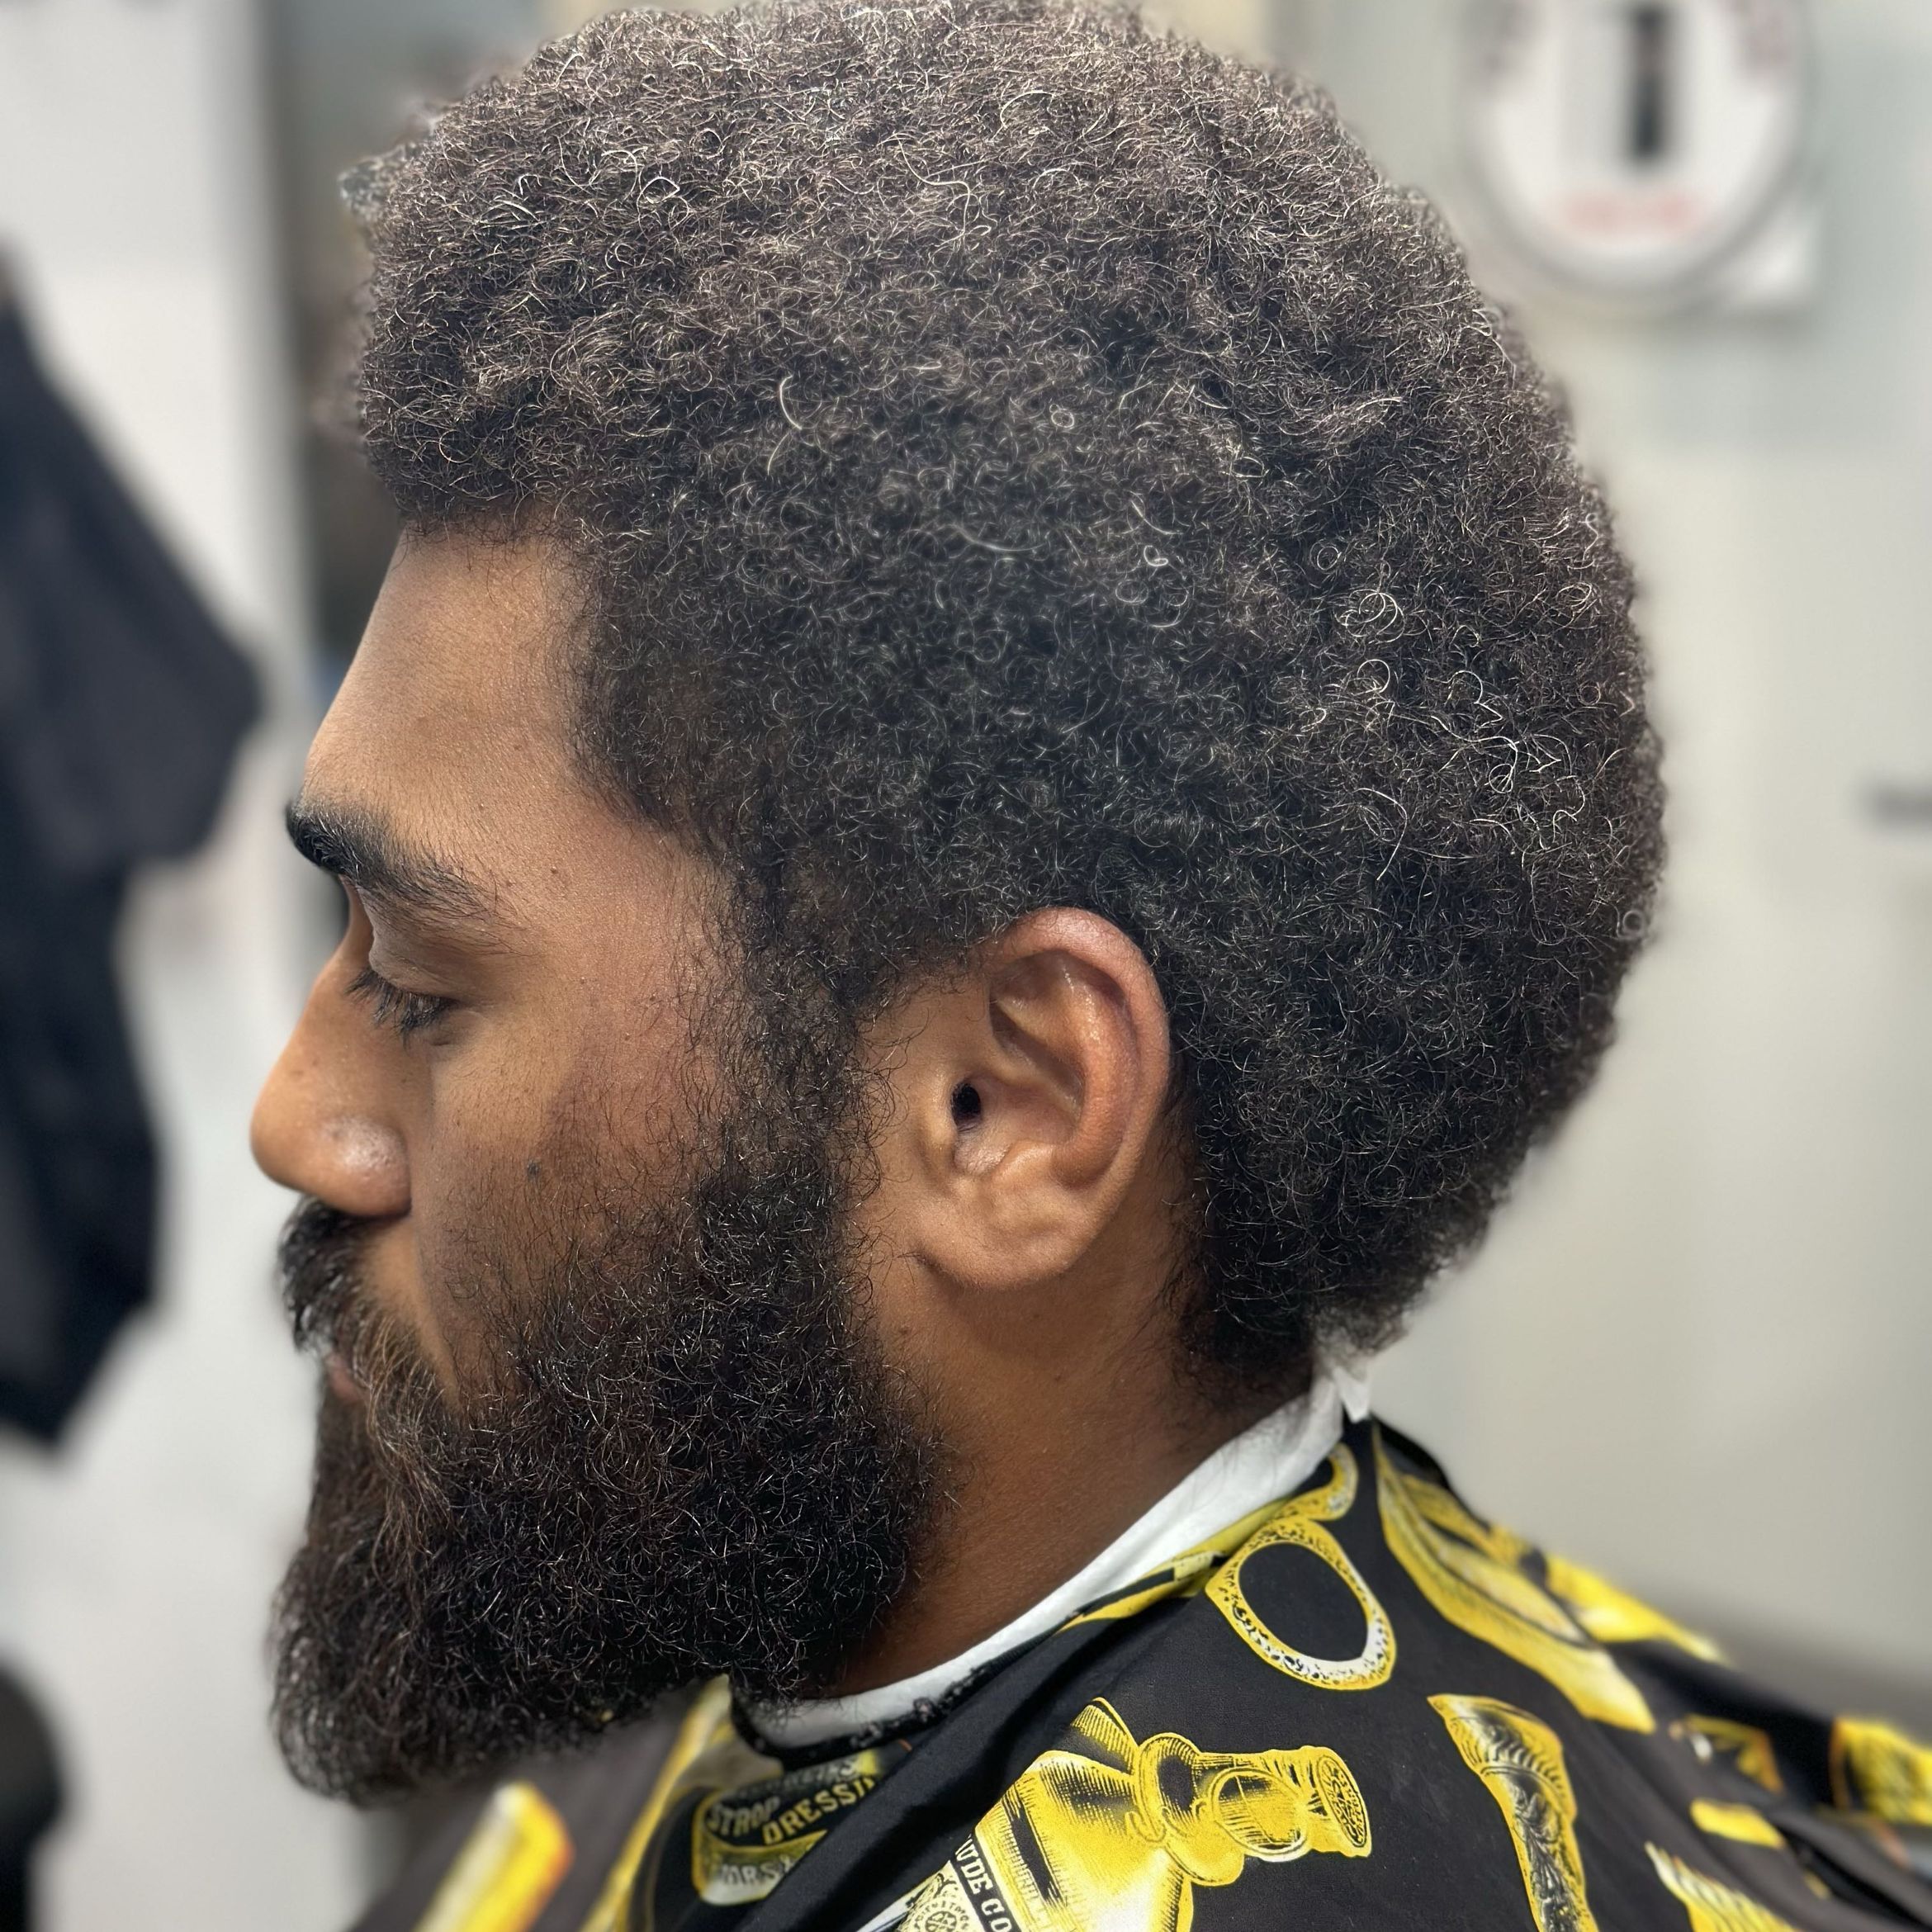 Haircut and Full Beard portfolio